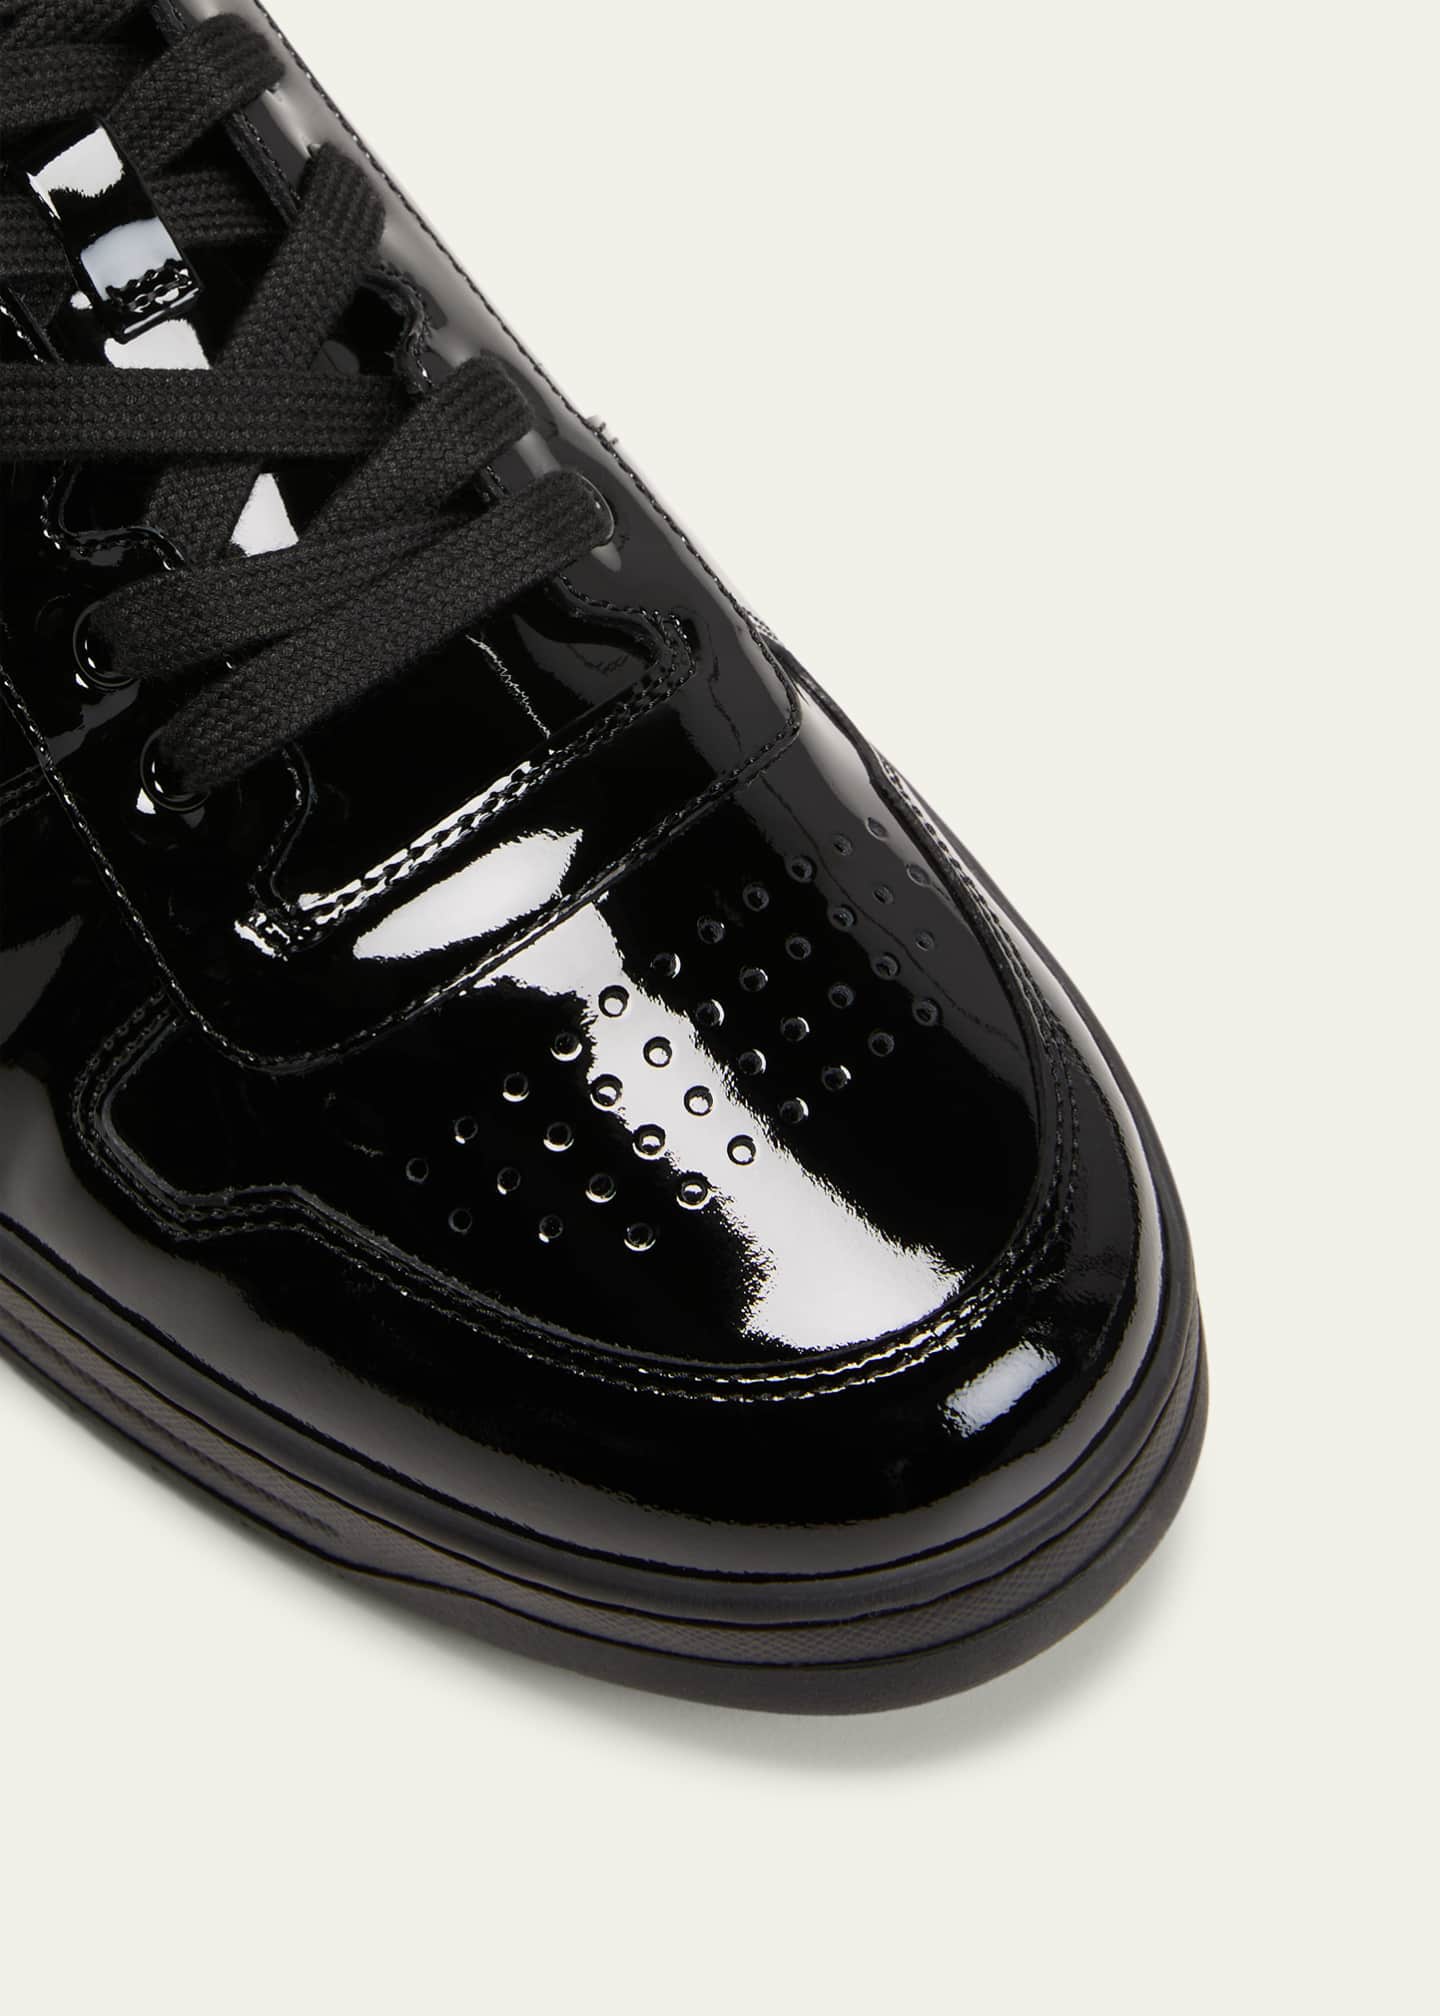 Glossy Glam: Black Patent Leather Prada Sneakers